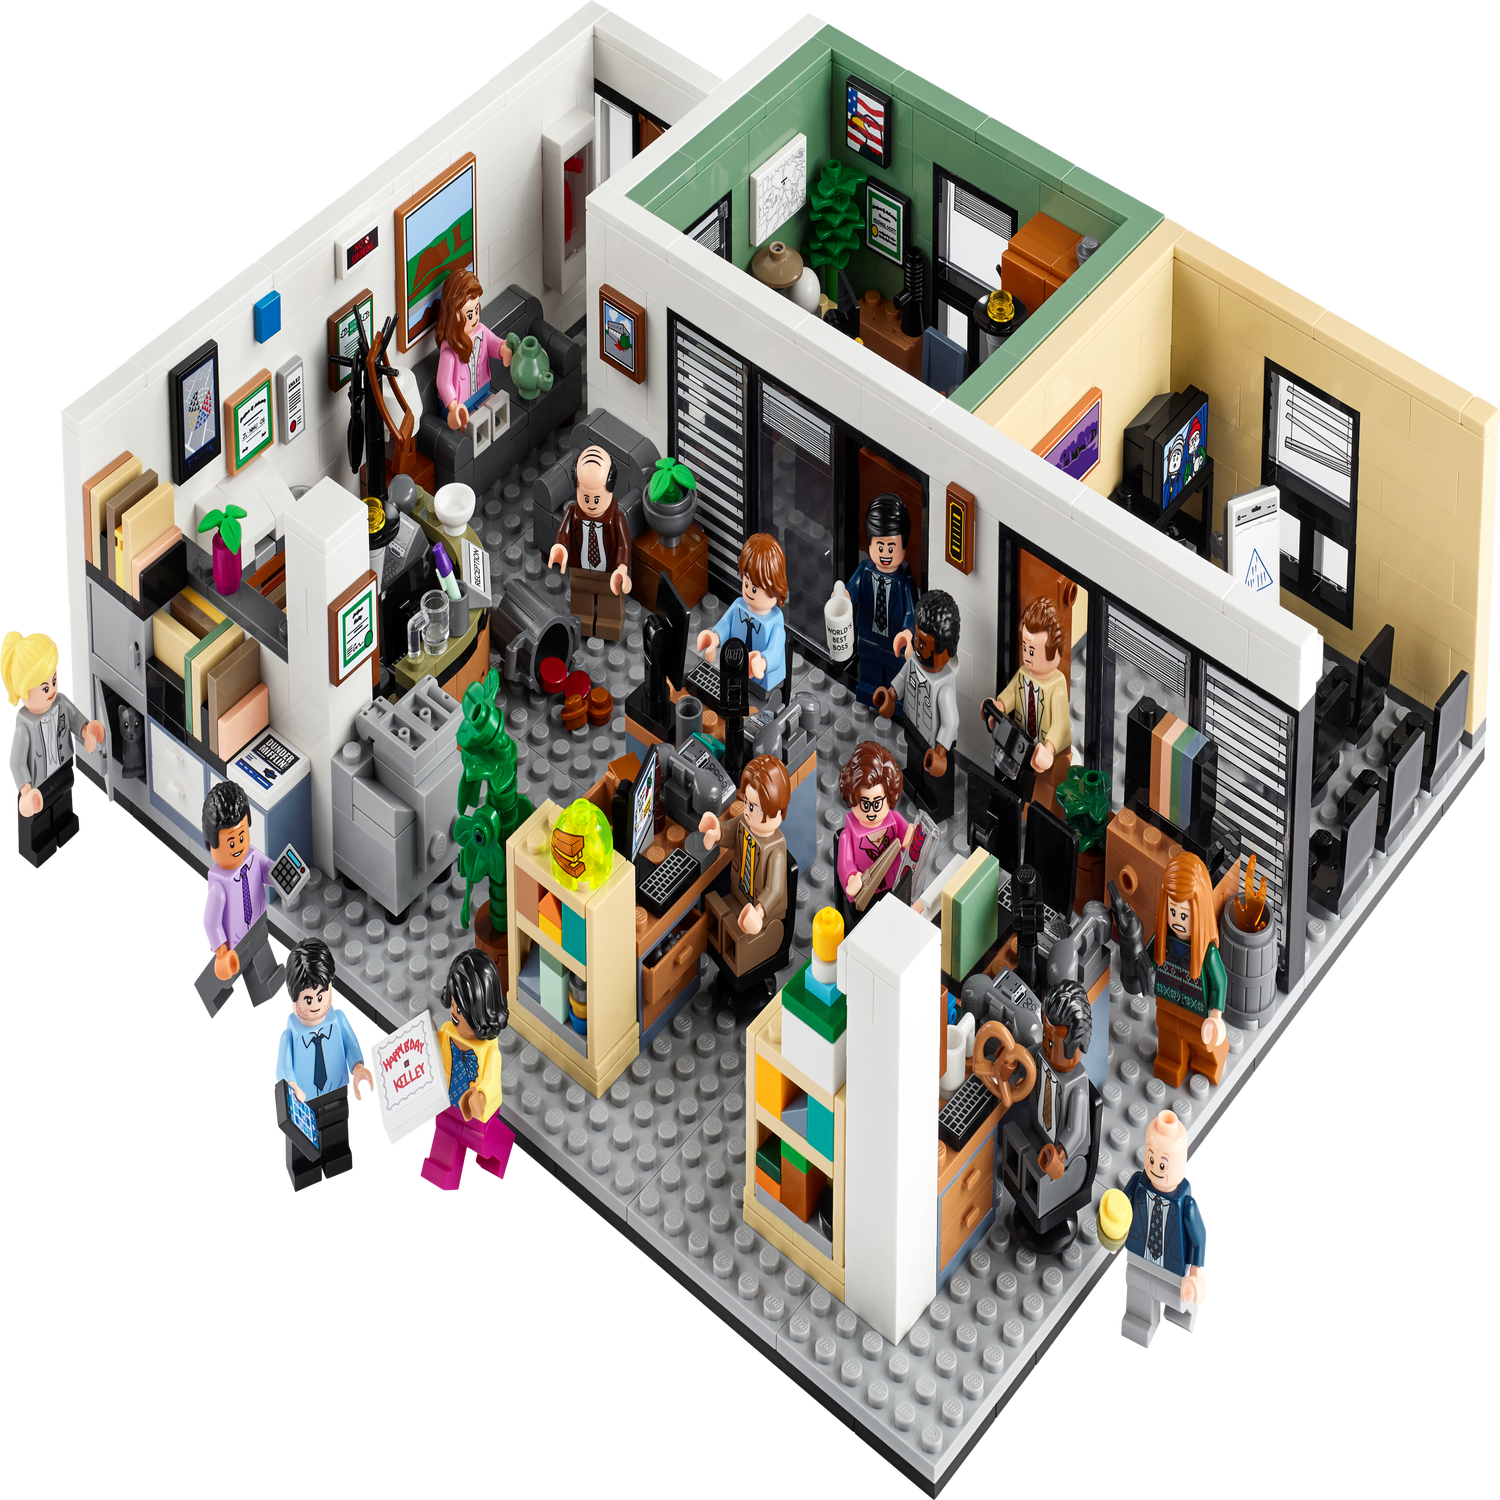 LEGO Ideas The Office Set 21336